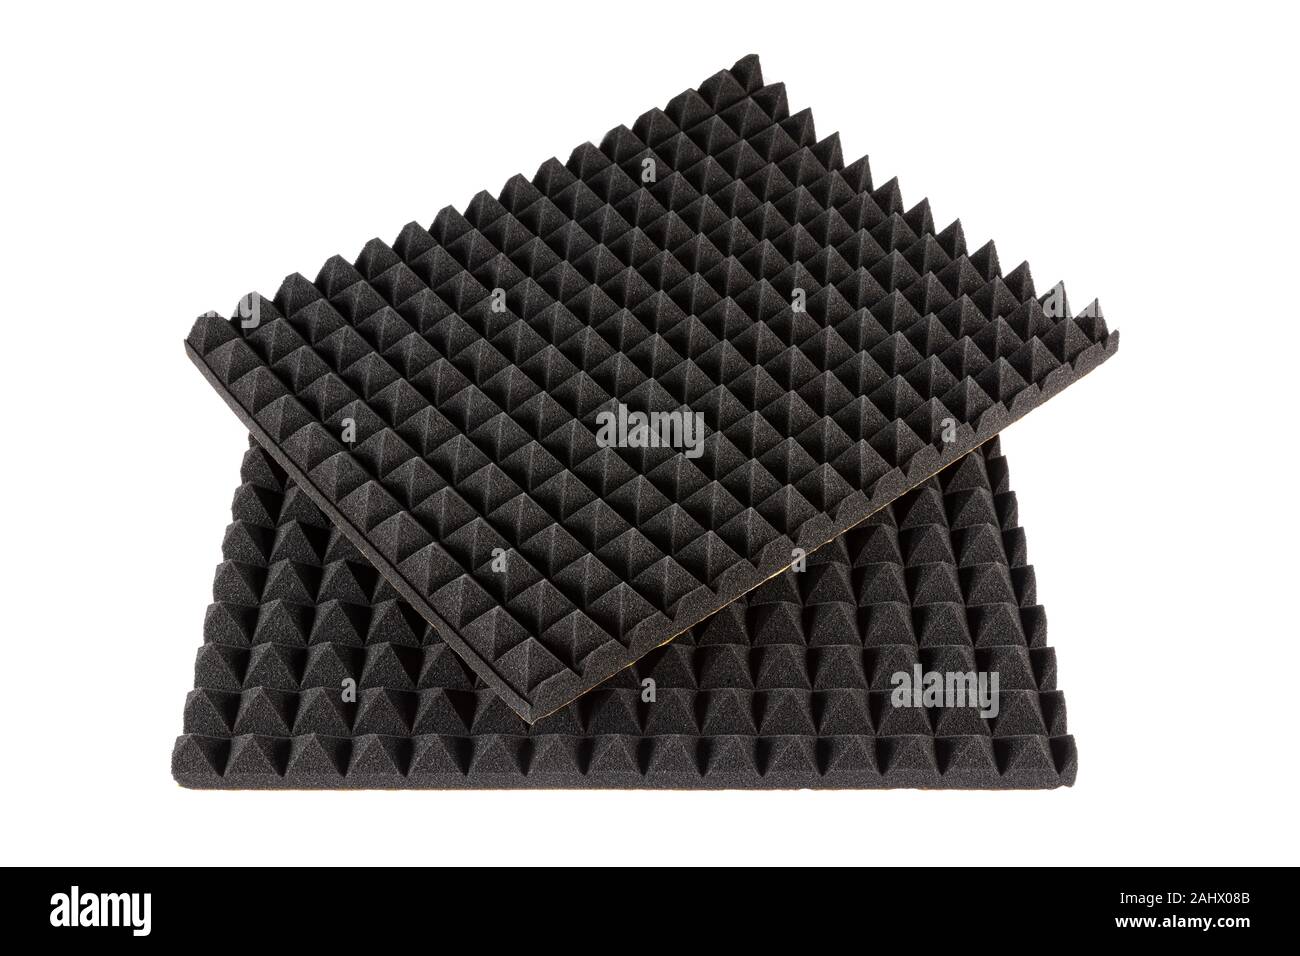 SONEX Pyramid acoustic foam panels provide optimal acoustic control